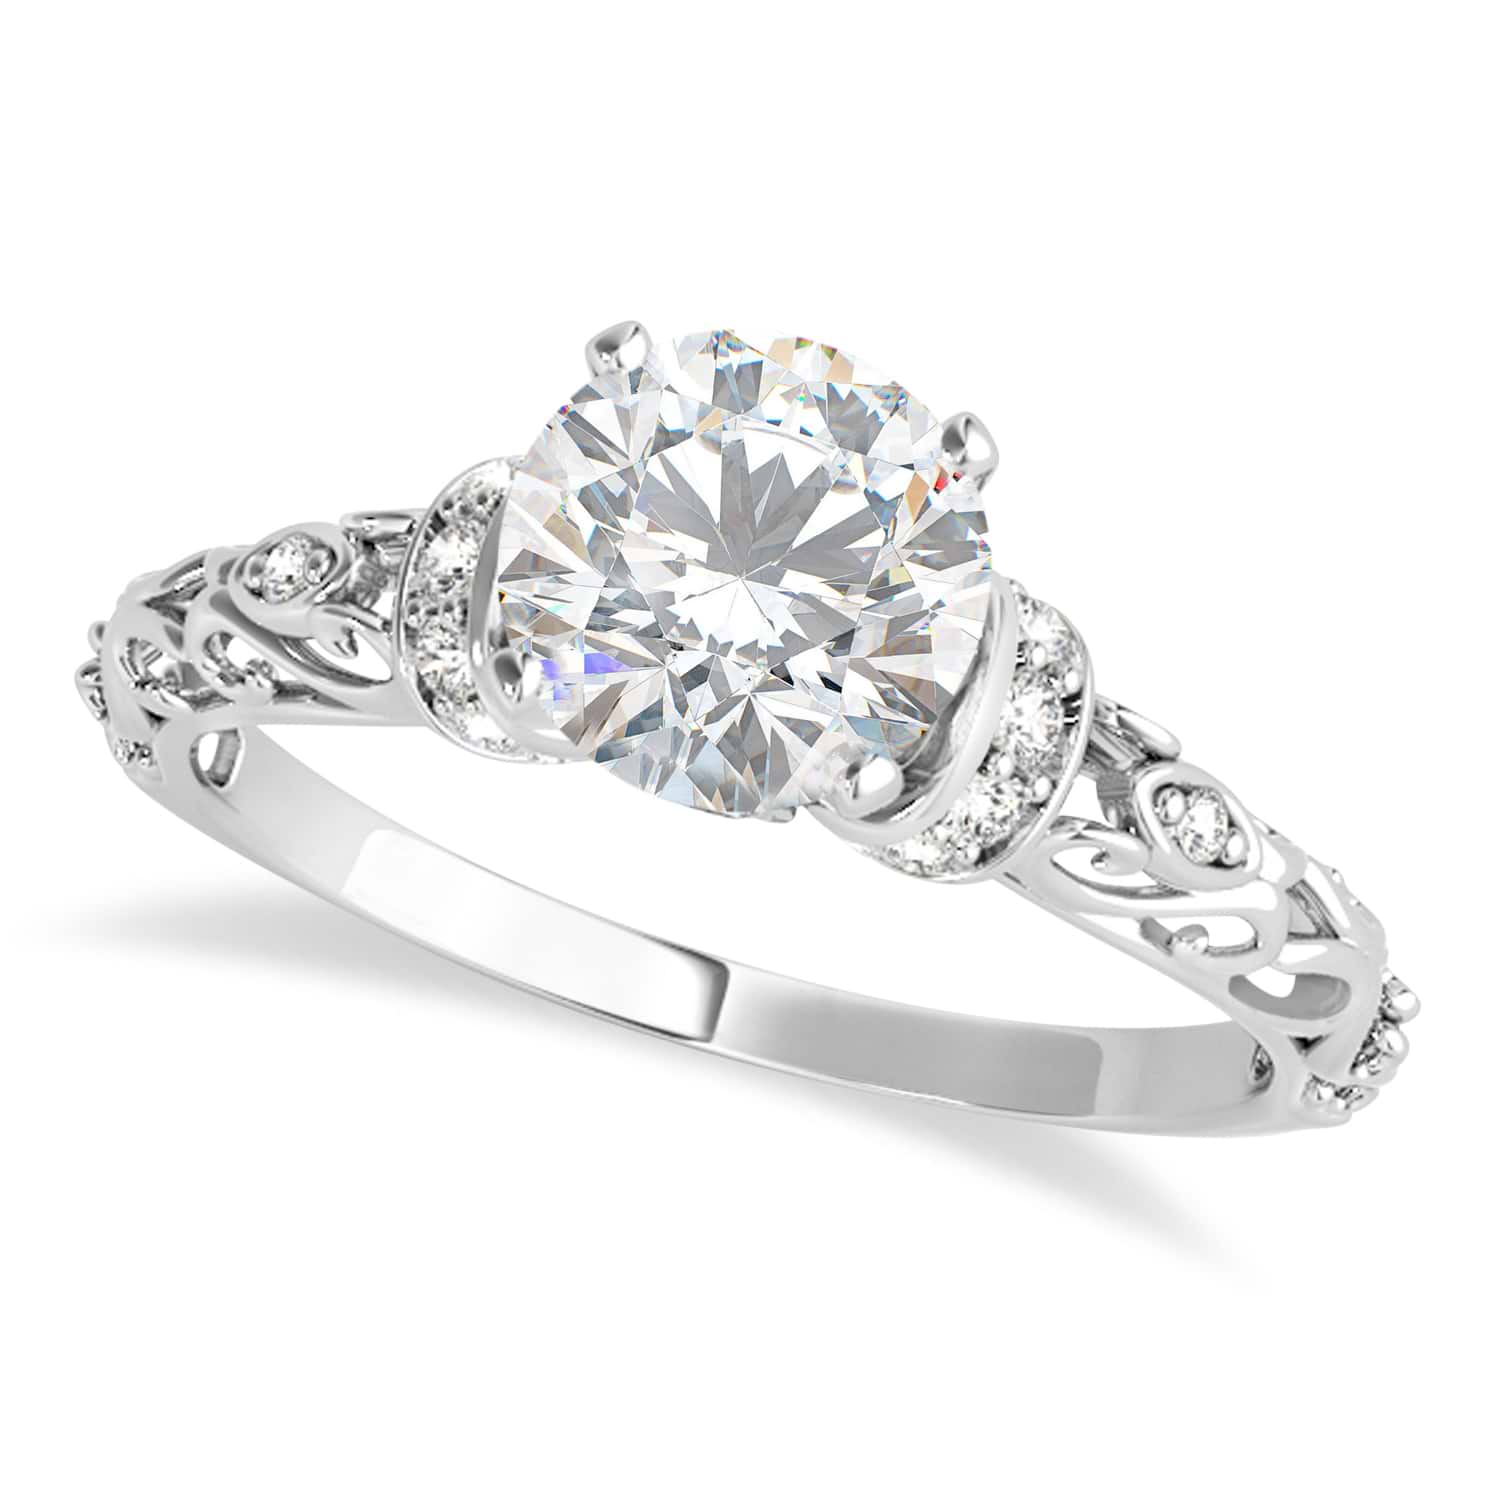 Moissanite & Diamond Antique Style Engagement Ring 14k White Gold (1.62ct)